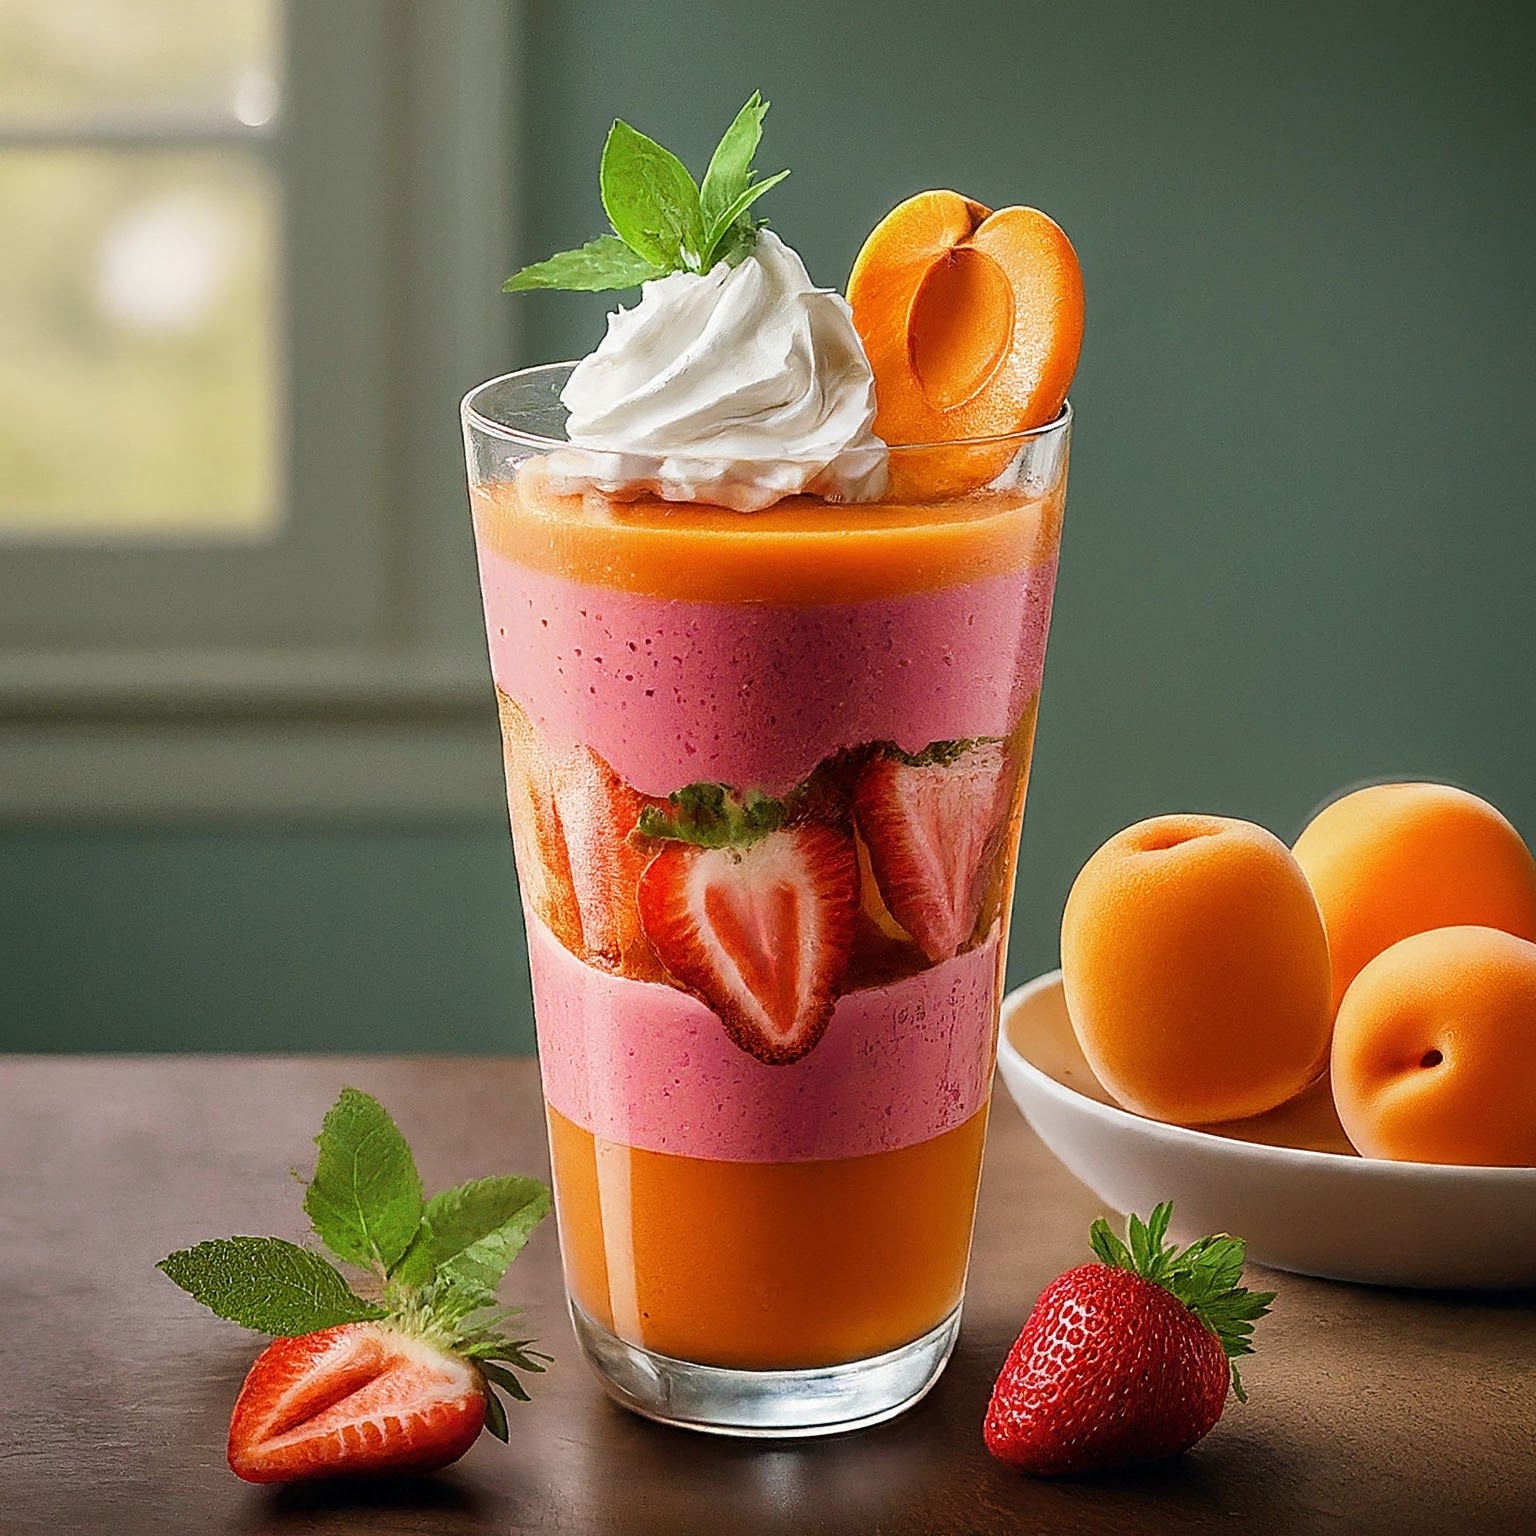 Apricot Strawberry Smoothie Recipe